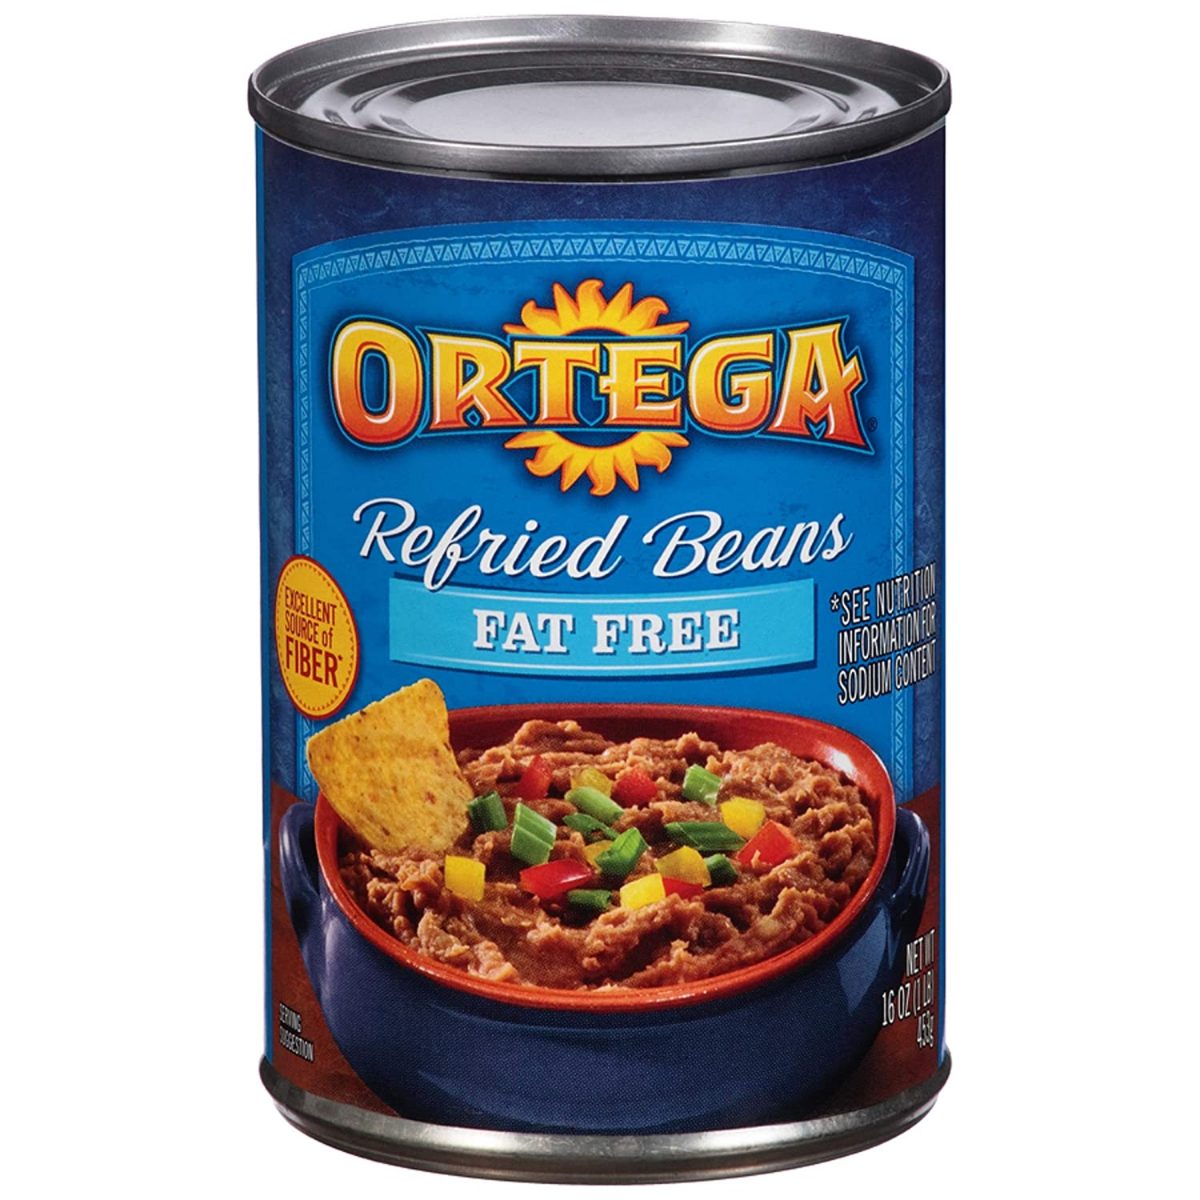 Ortega Refried Beans, Fat Free
